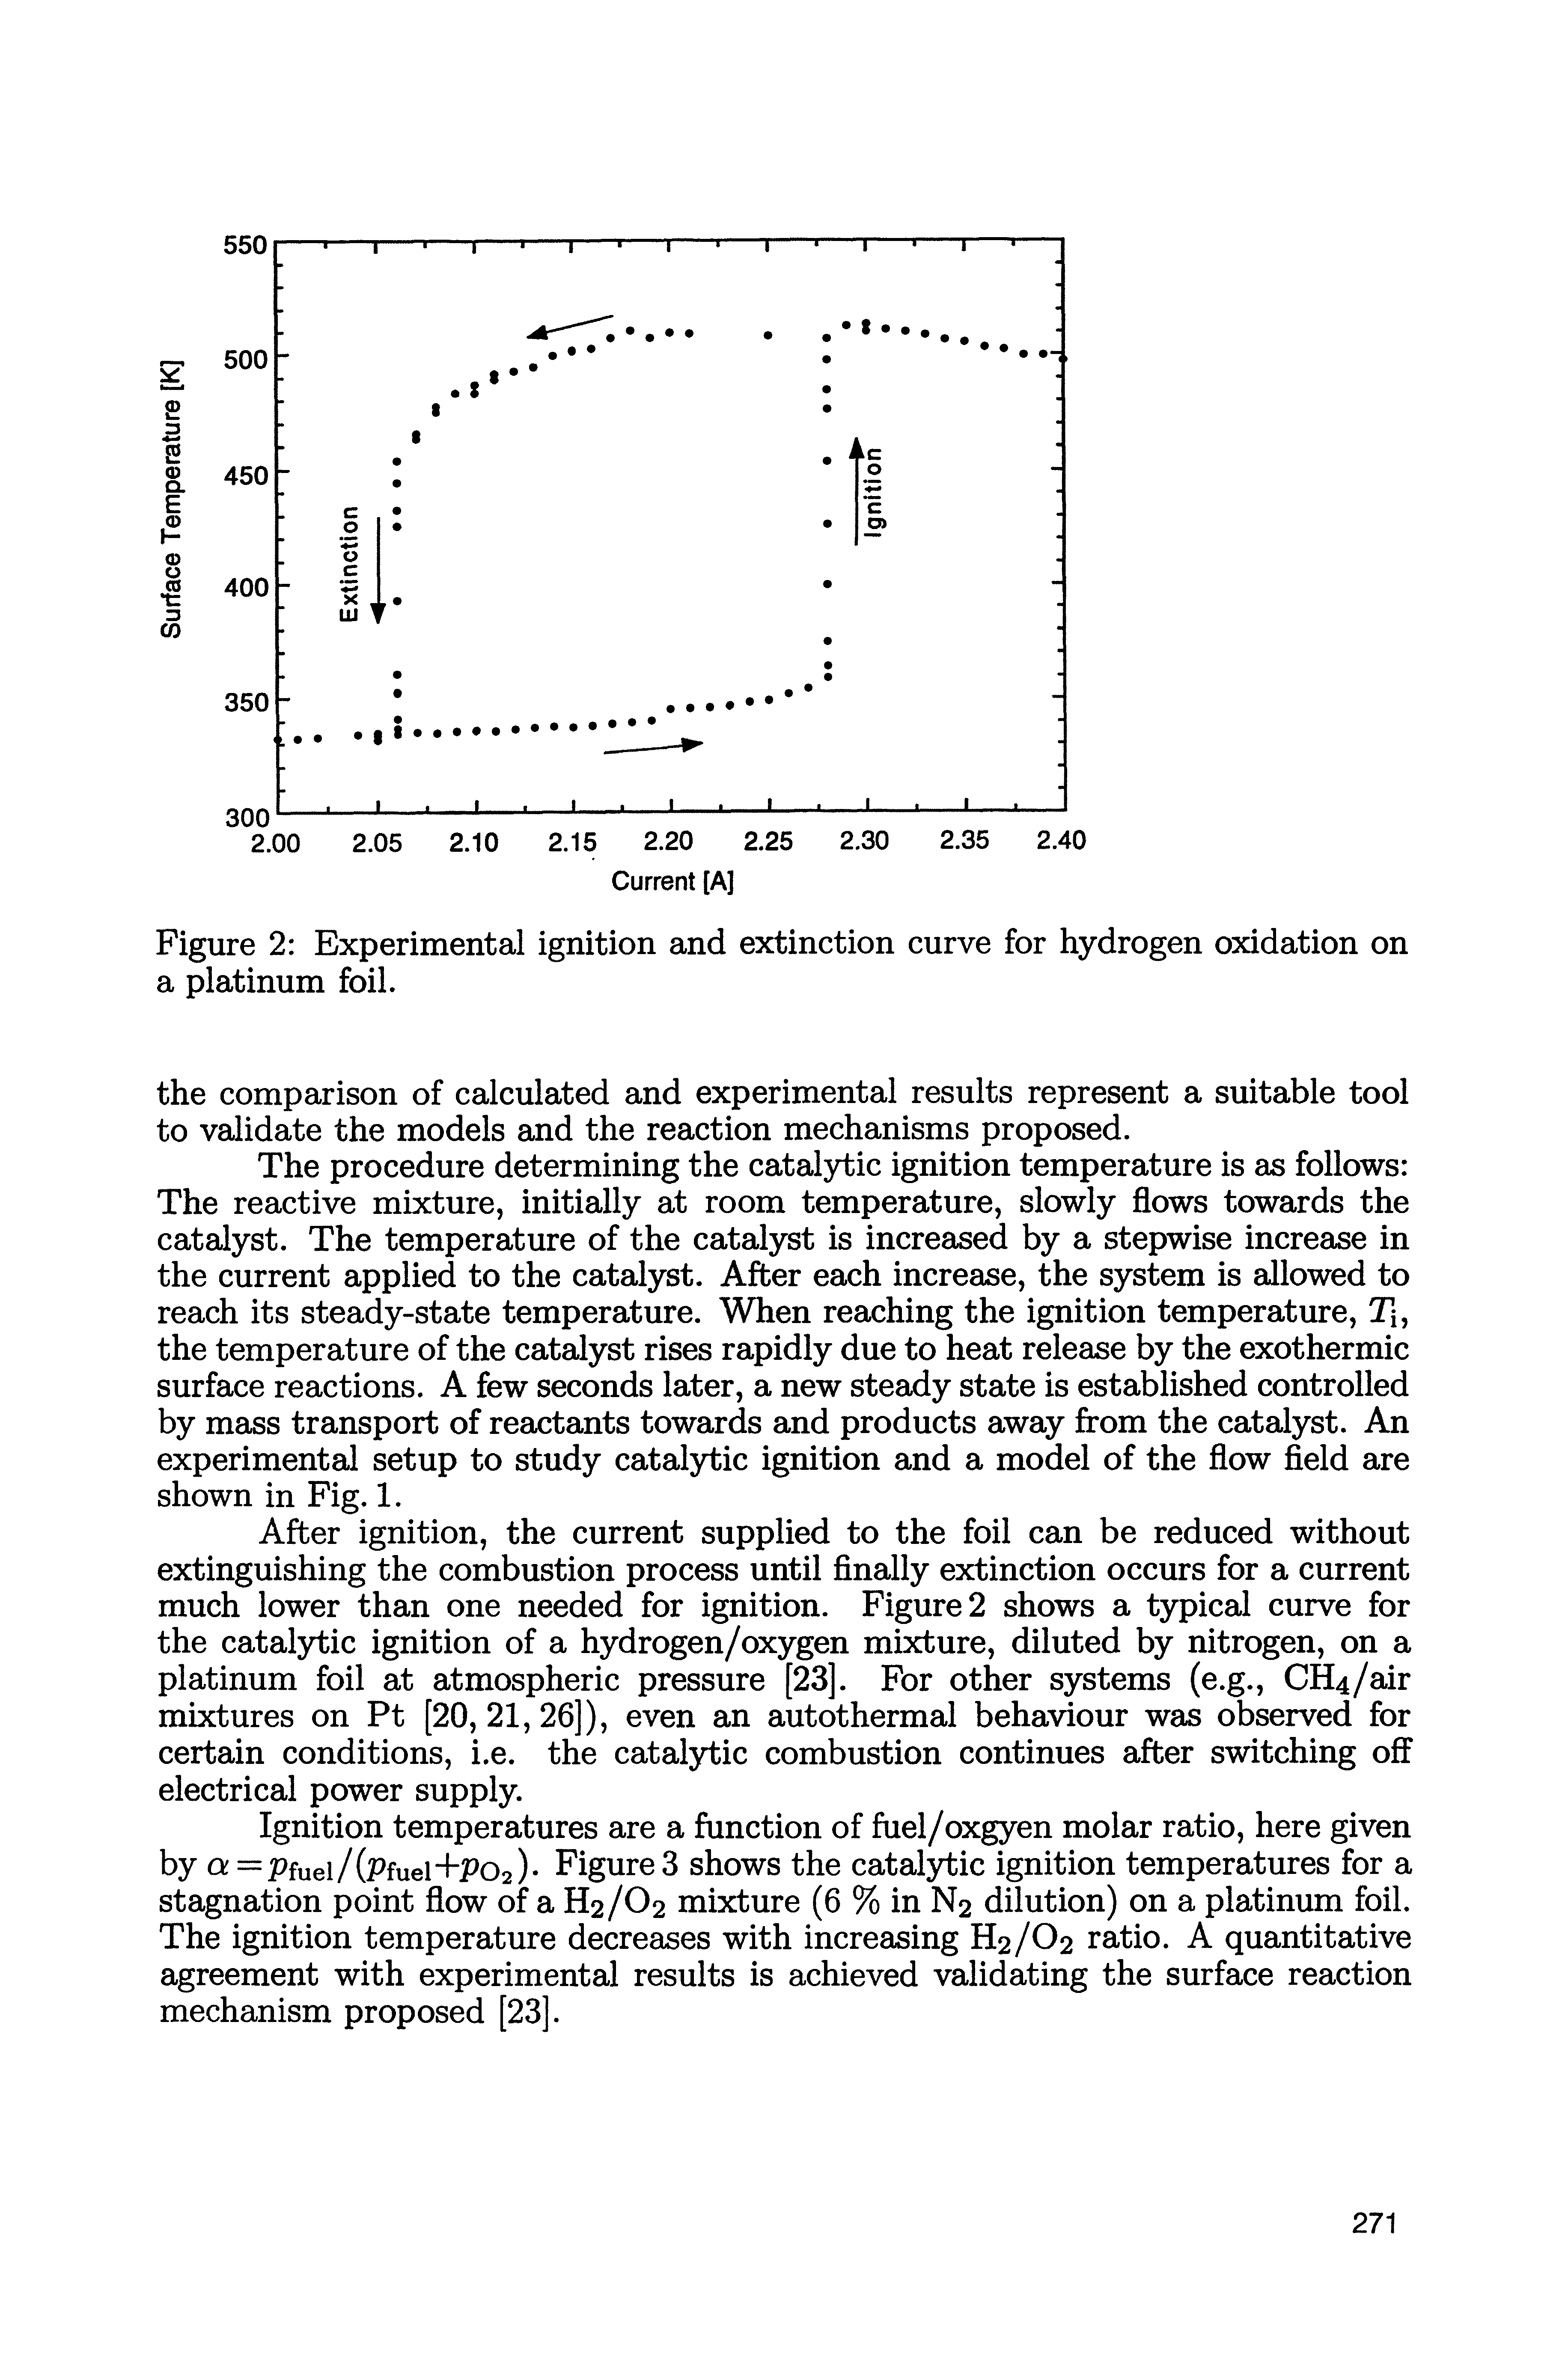 Figure 2 Experimental ignition and extinction curve for hydrogen oxidation on a platinum foil.